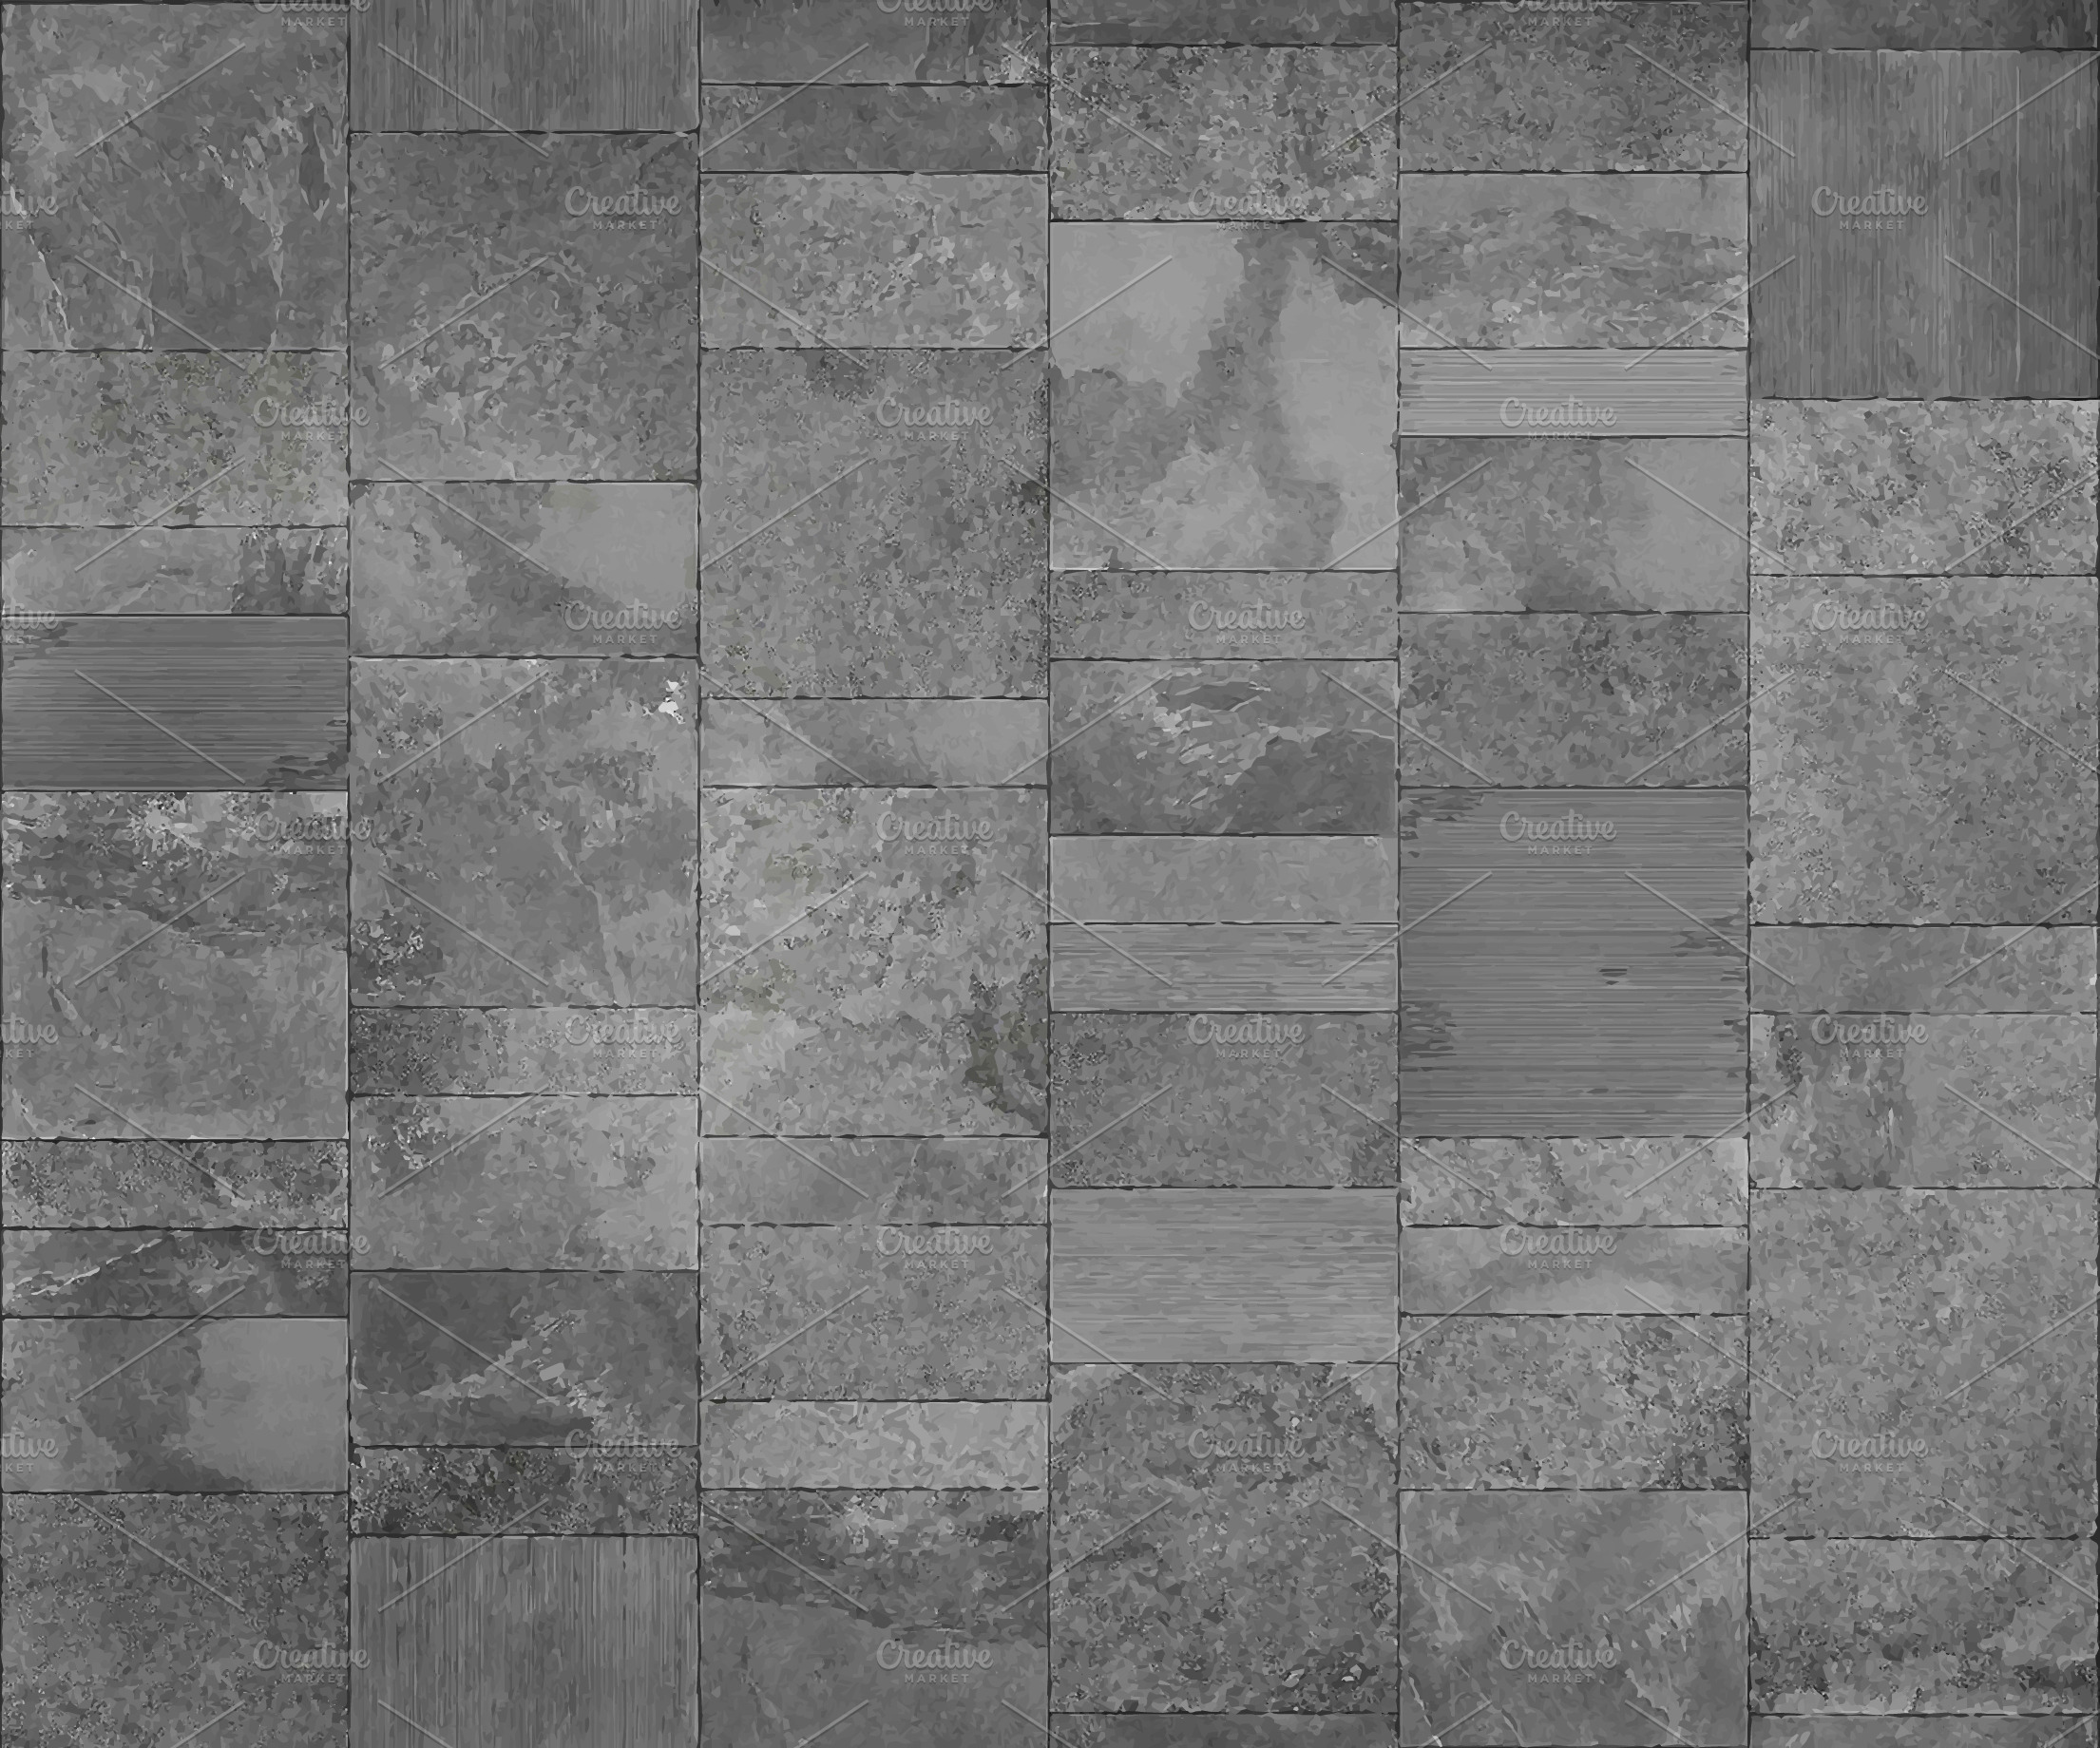 Slate tile texture ~ Textures ~ Creative Market
